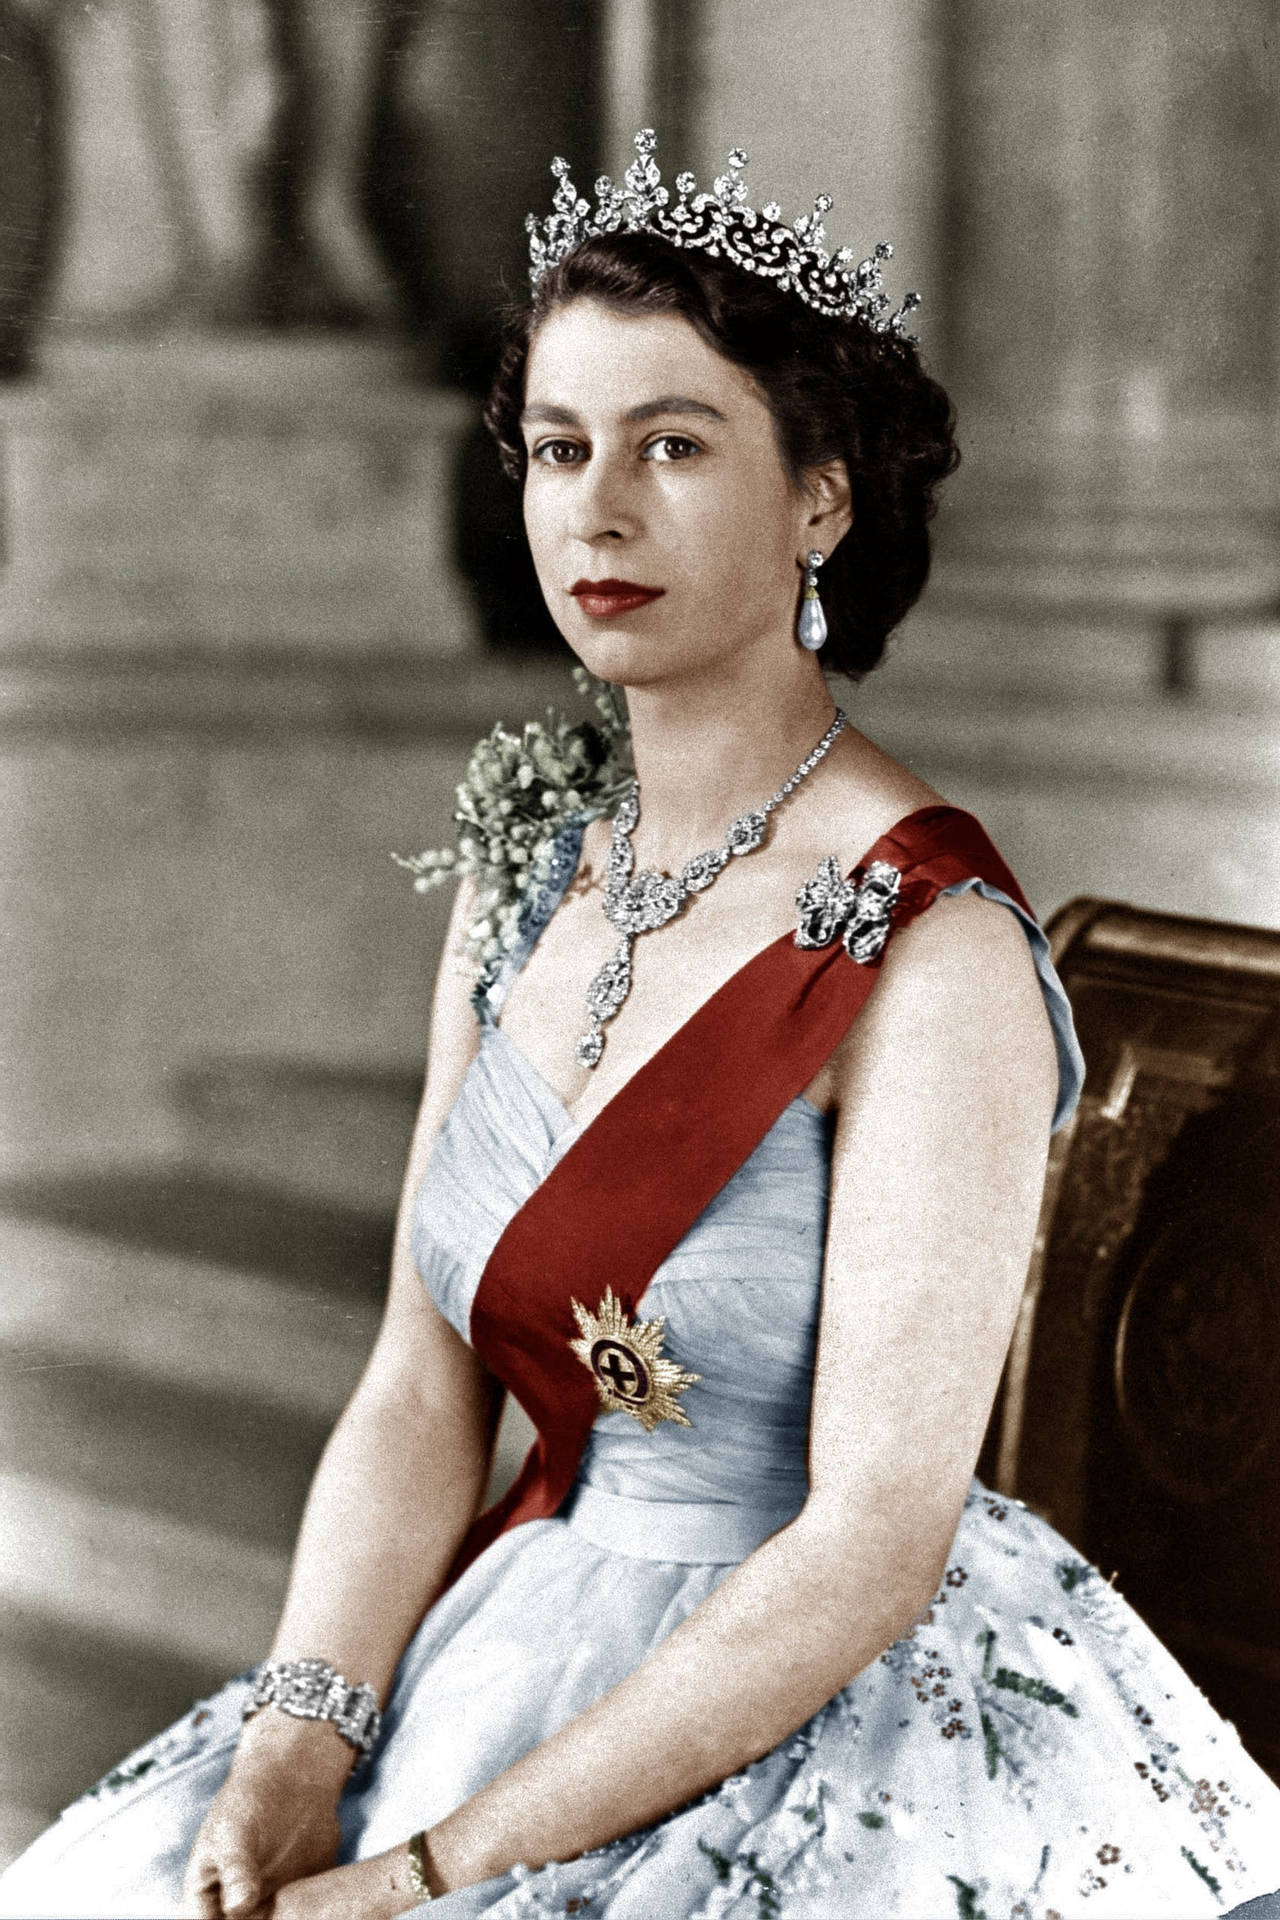 Queen Elizabeth Vintage Young Photograph